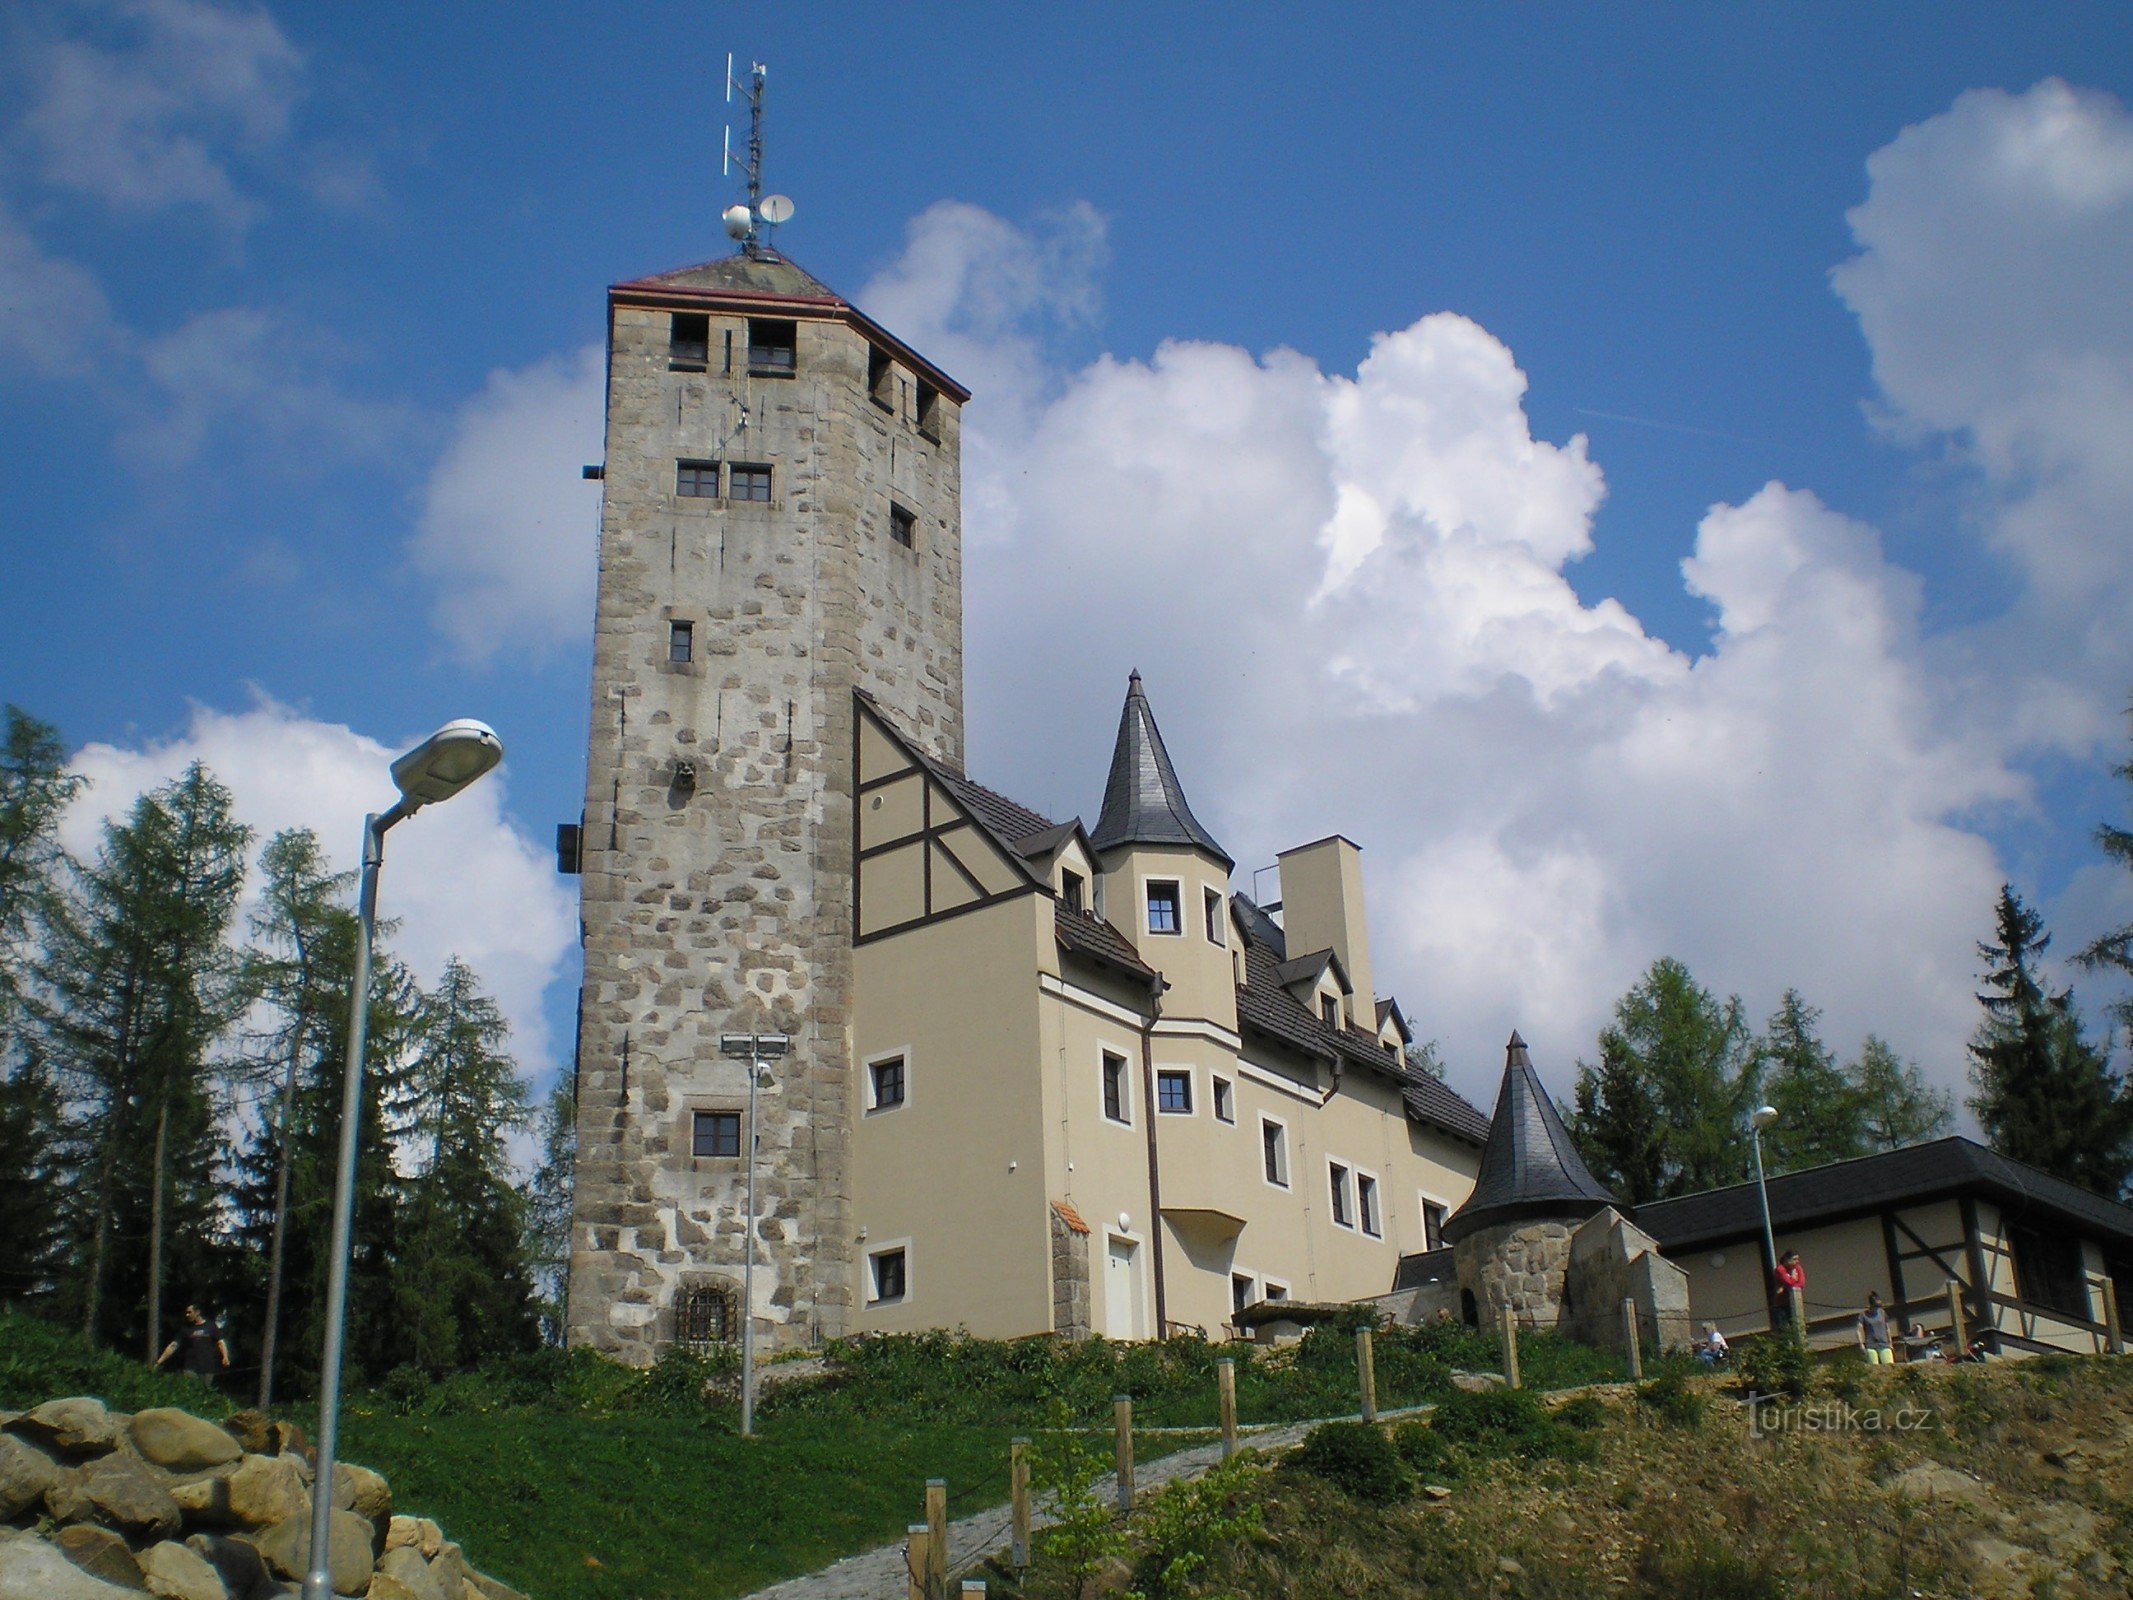 Wieża widokowa Liberecká víšina